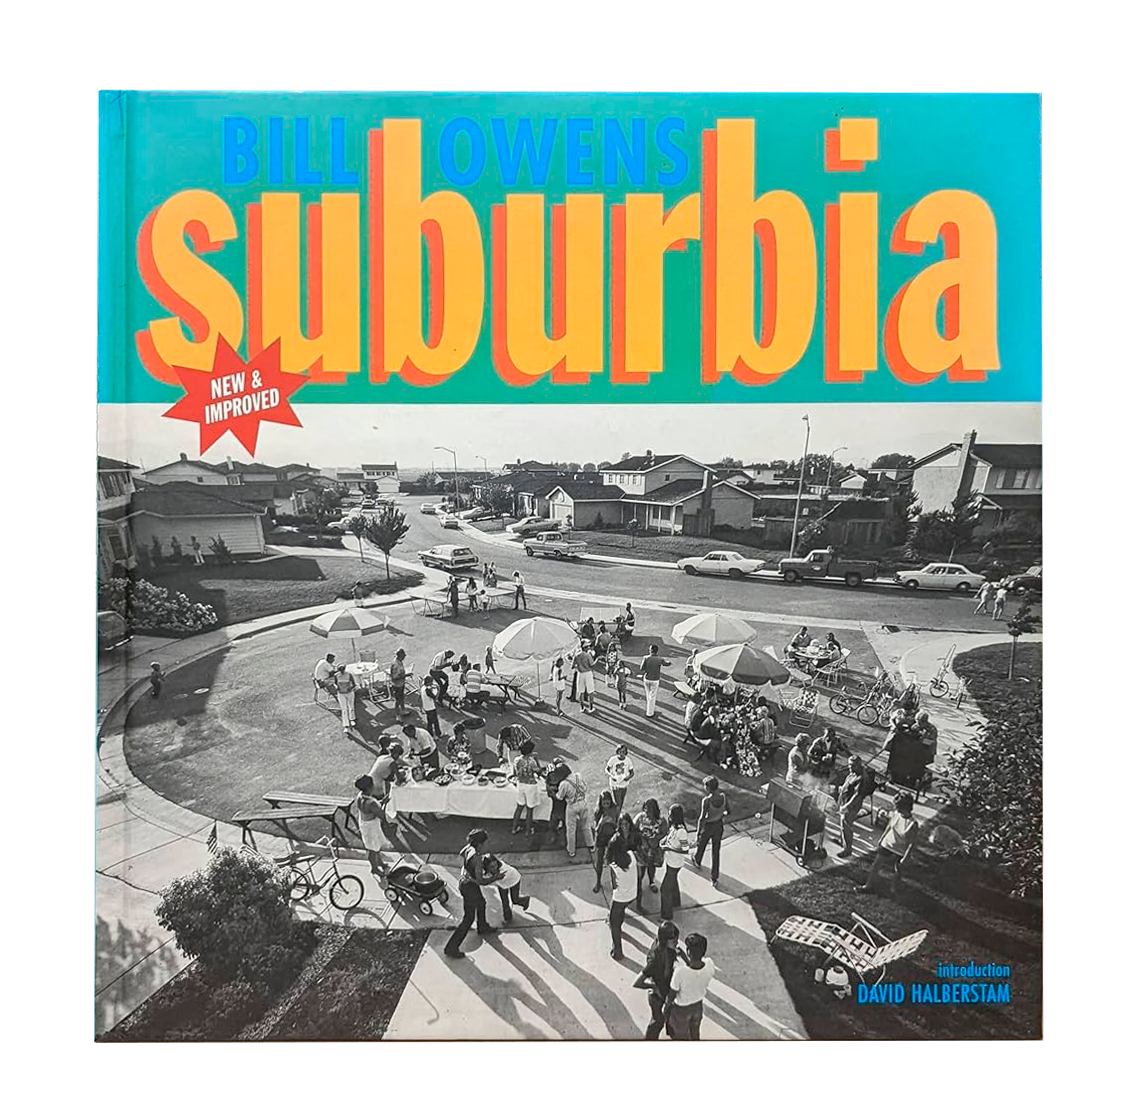 Suburbia - Bill Owens